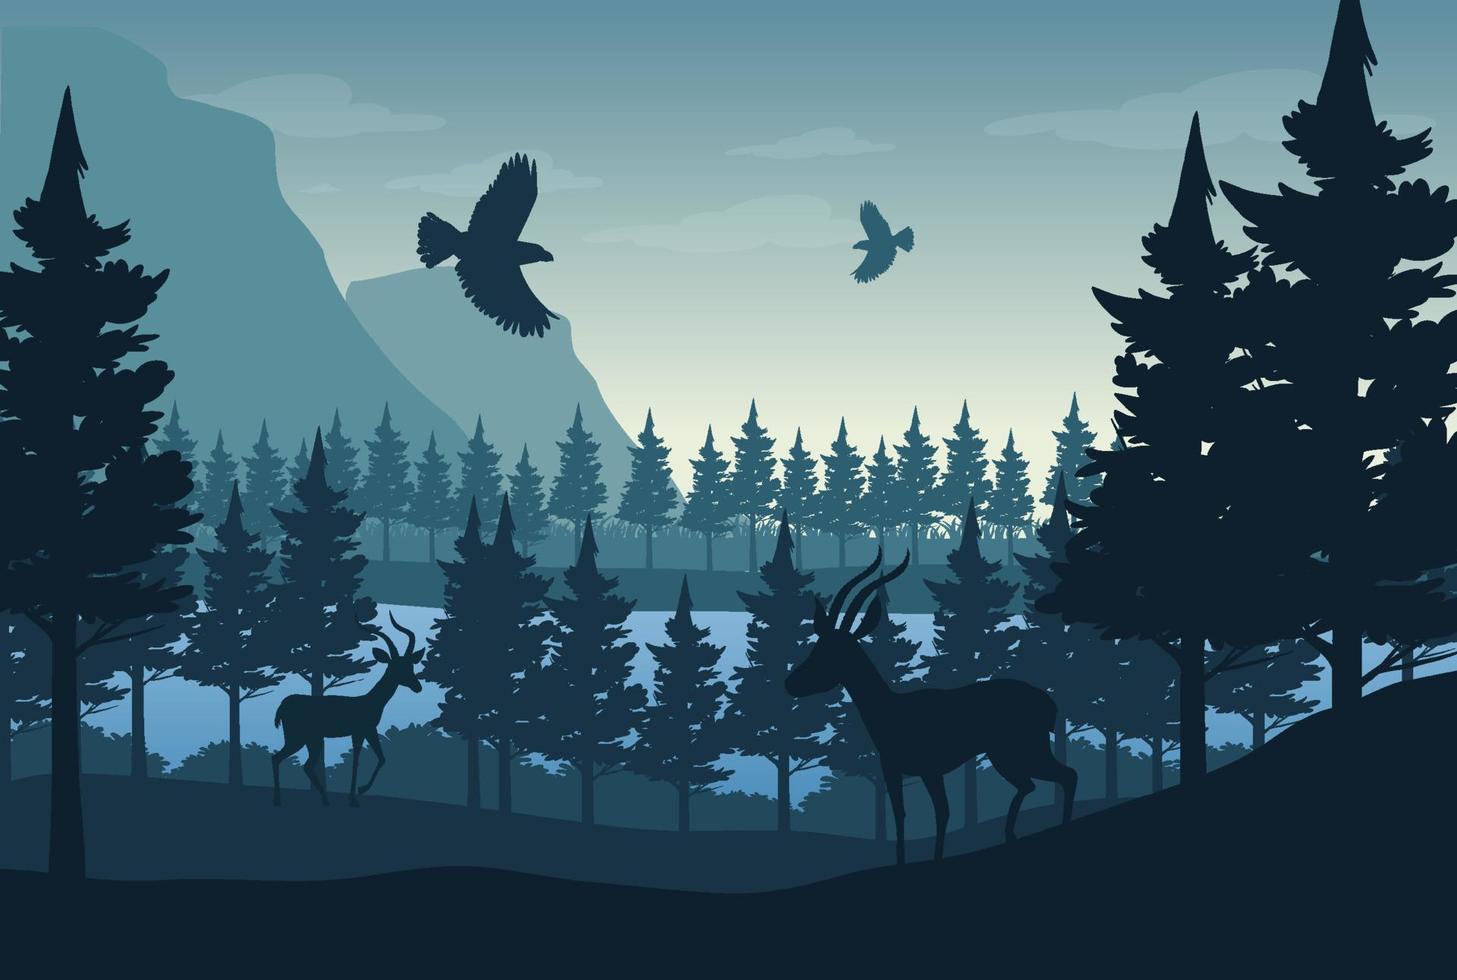 silhouet bos landschap achtergrond vector